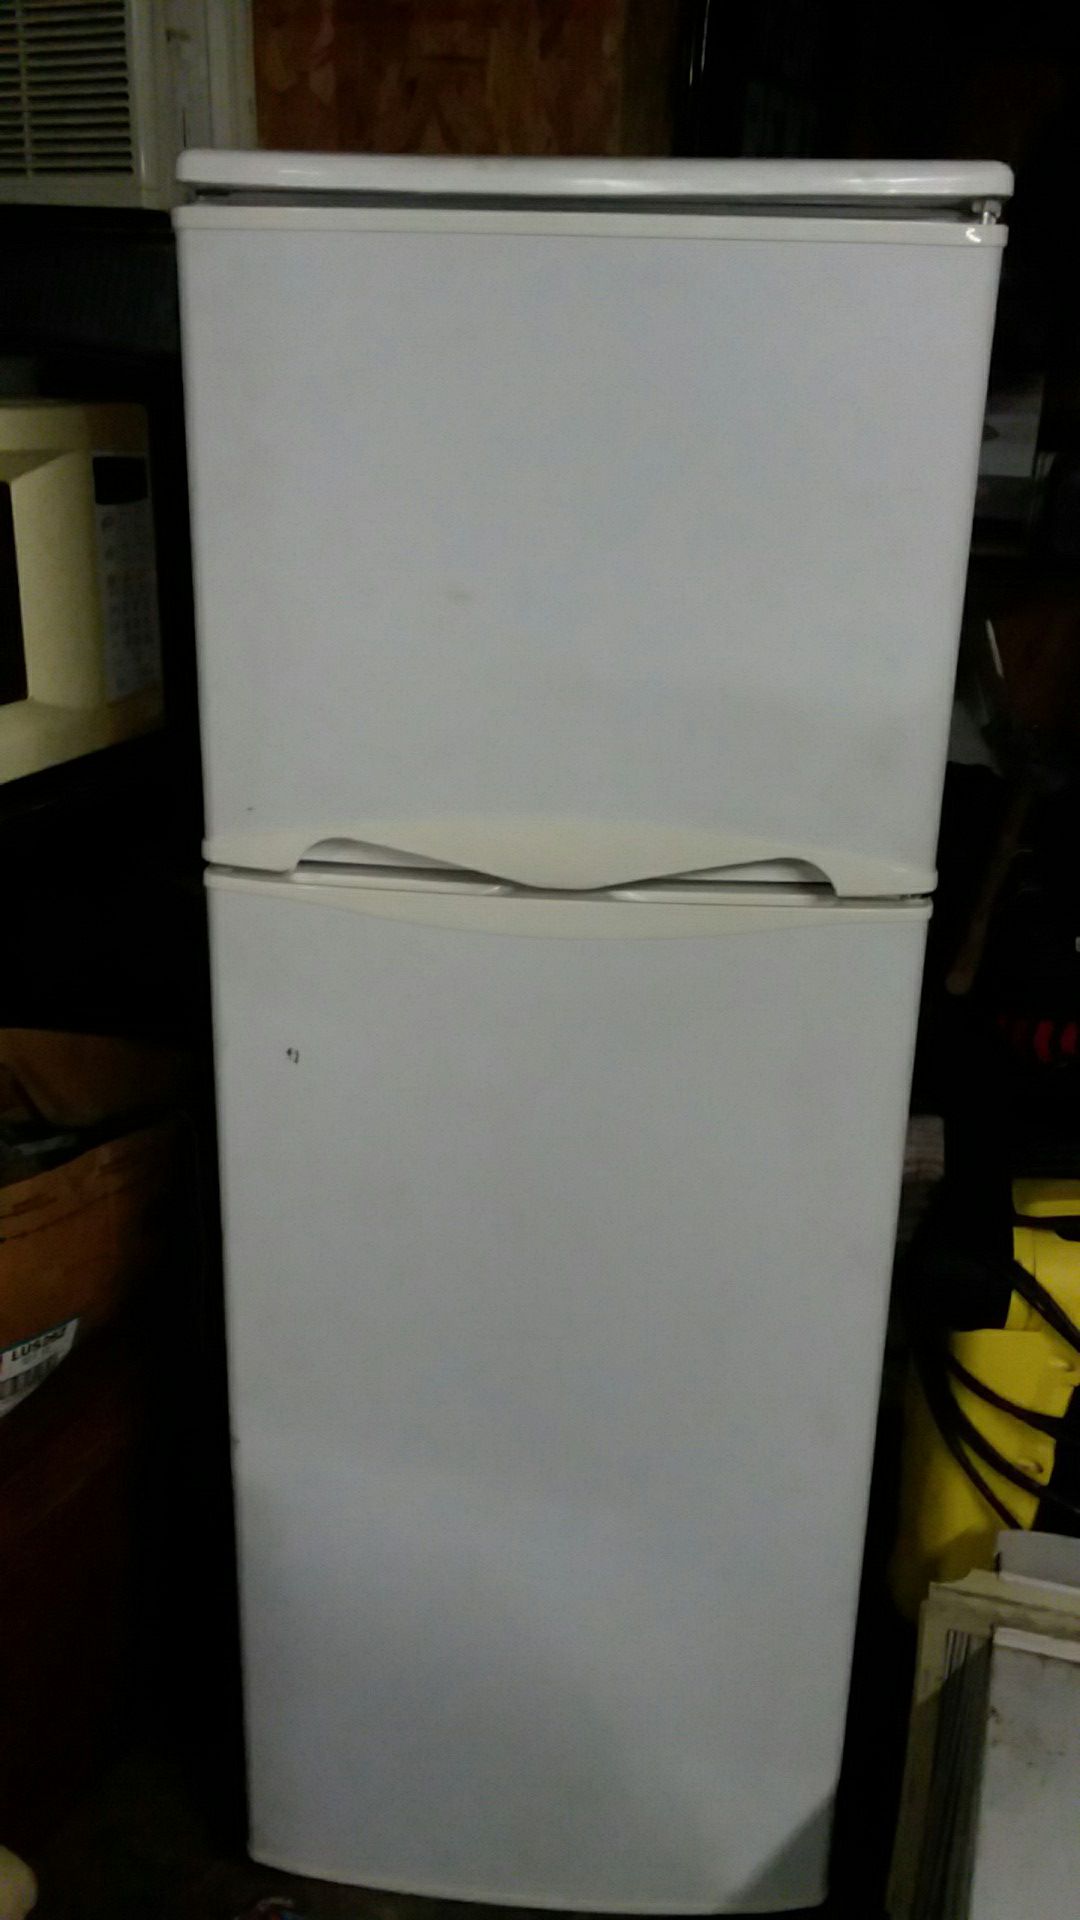 HD supply mini refrigerator